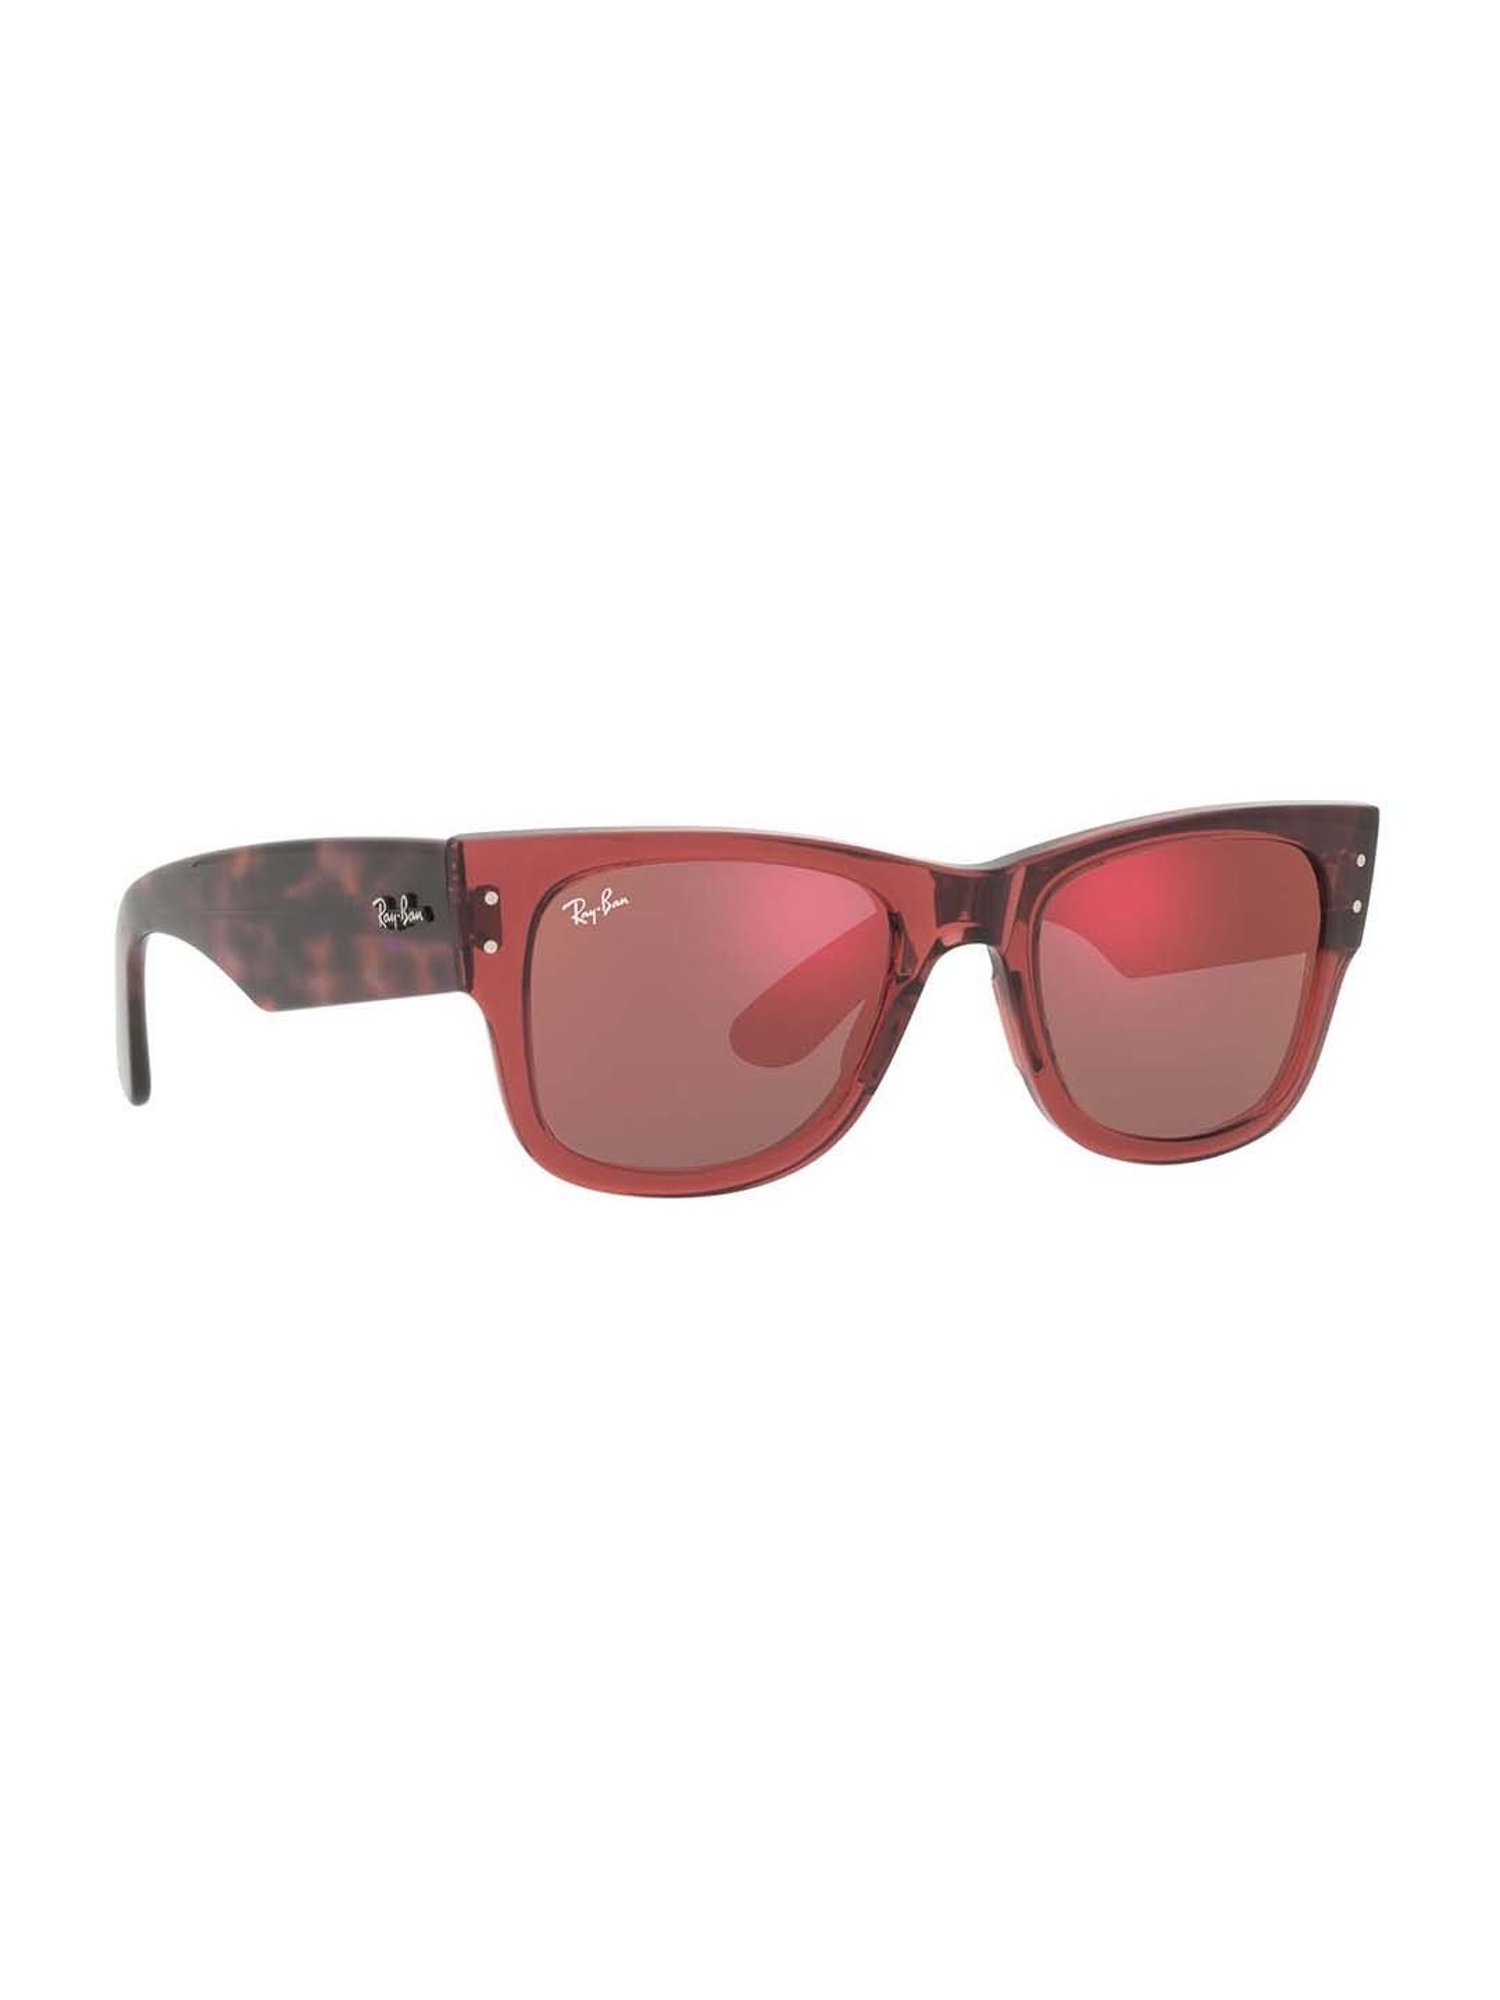 ClearDekho Semi Transparent Sparkle Red Full Rim Round Kids Sunglasses |  5-8 Years - ClearDekho - Eyeglasses, Sunglasses, Contact Lens, Frames